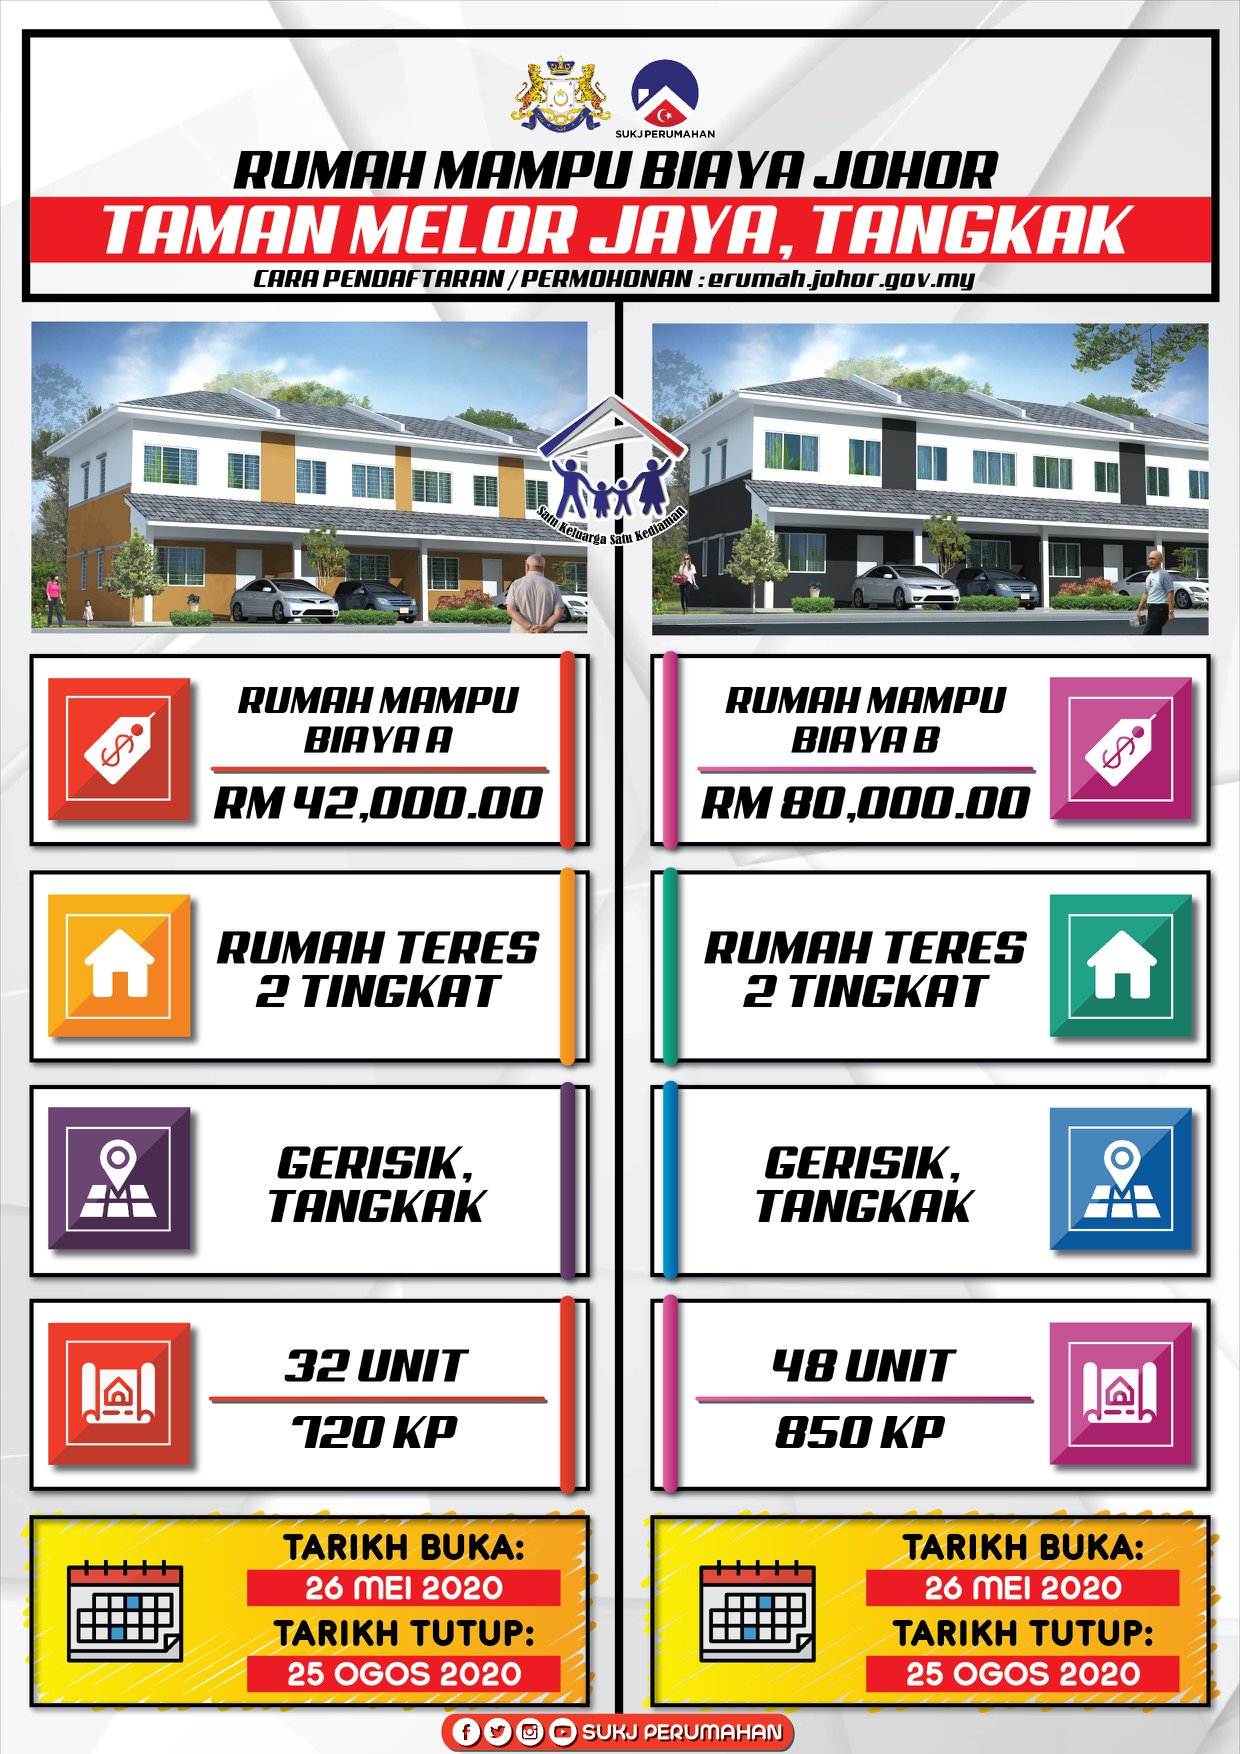 Permohonan Dan Pendaftaran Rumah Mampu Biaya Johor